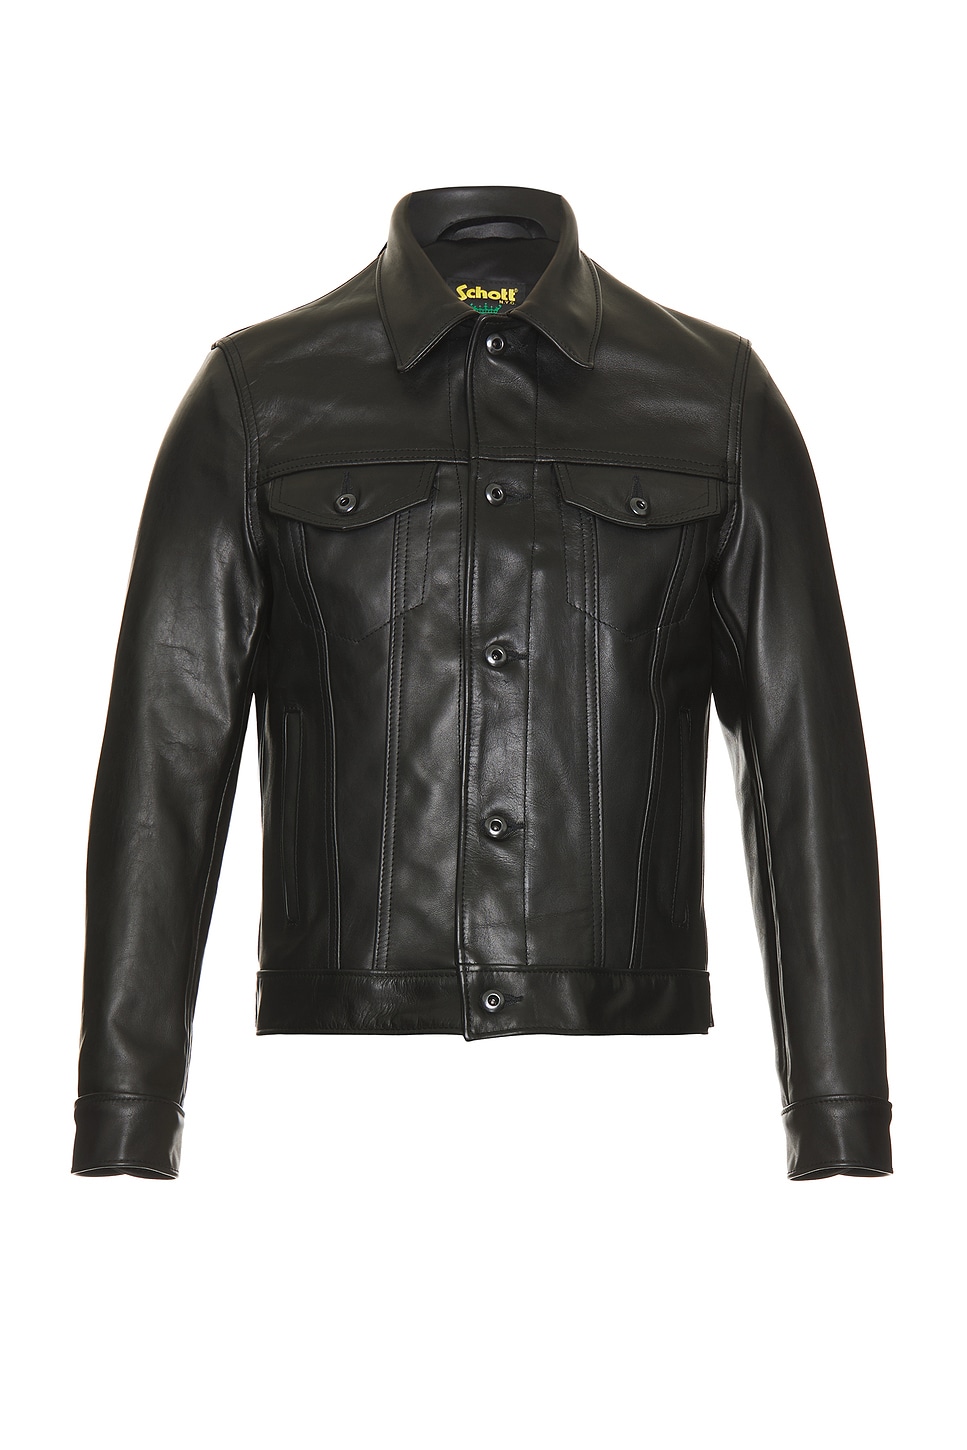 Image 1 of Schott Naked Cowhide Jean Style Jacket in Black